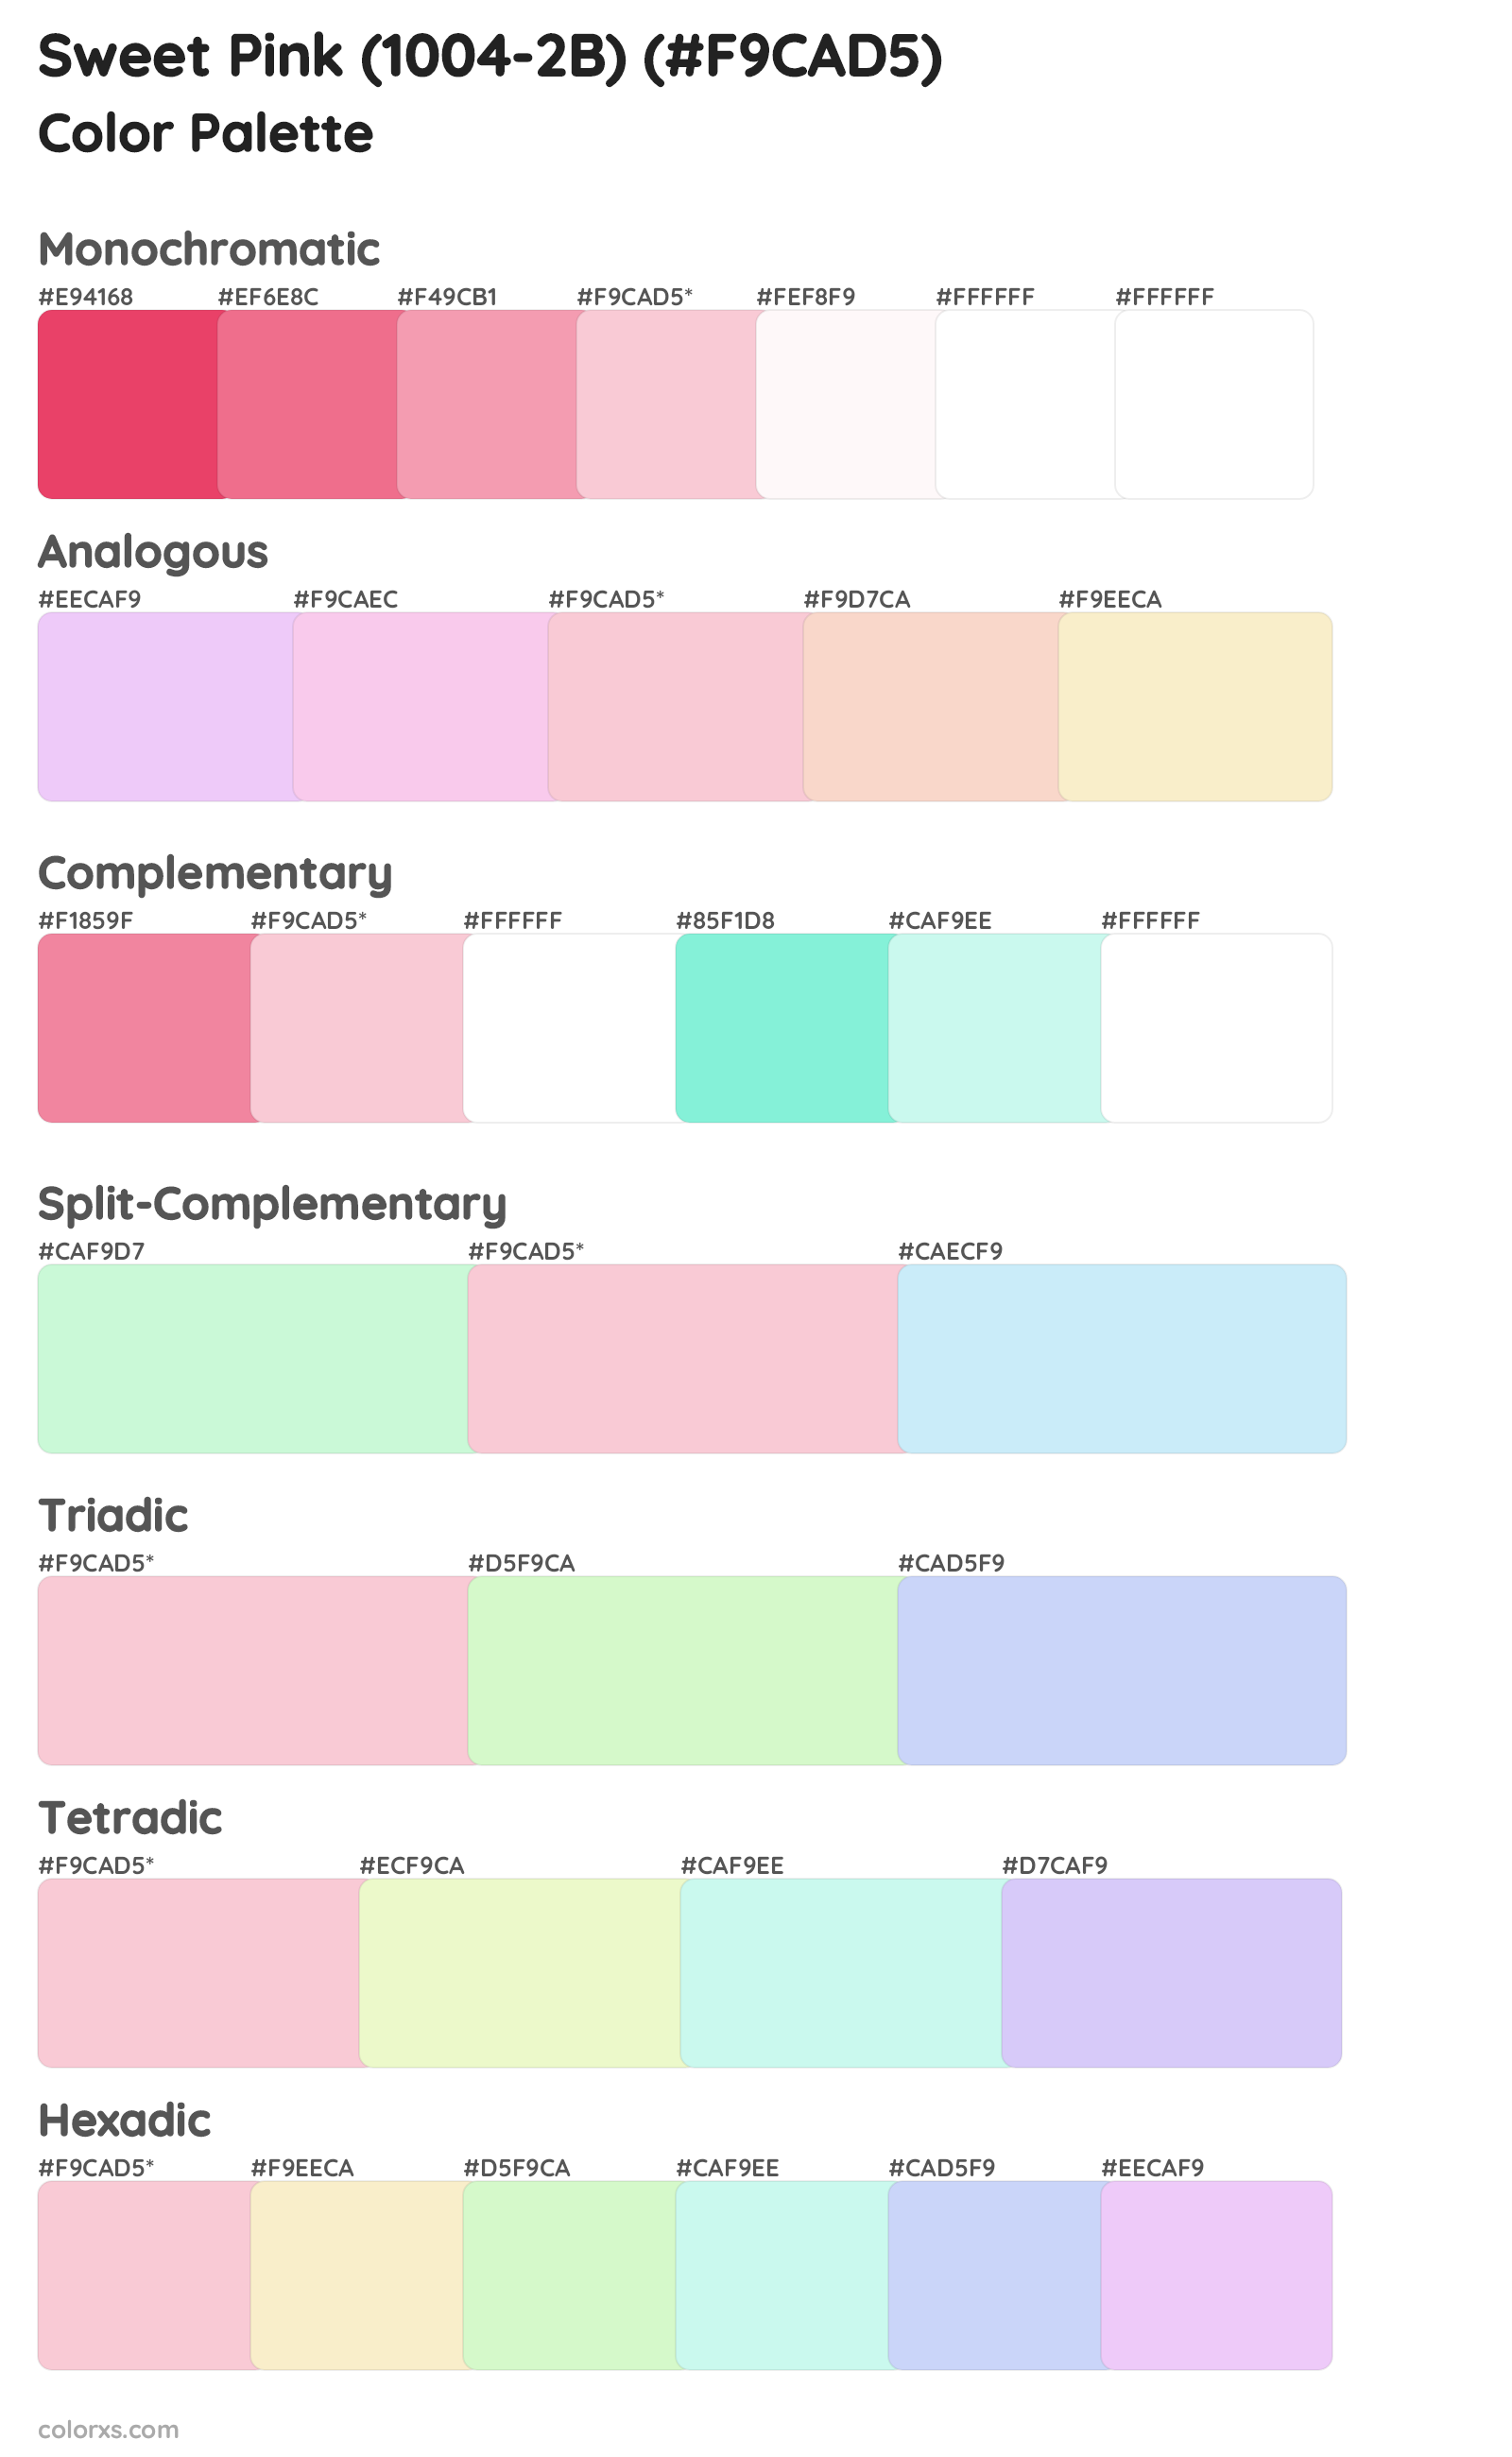 Sweet Pink (1004-2B) Color Scheme Palettes